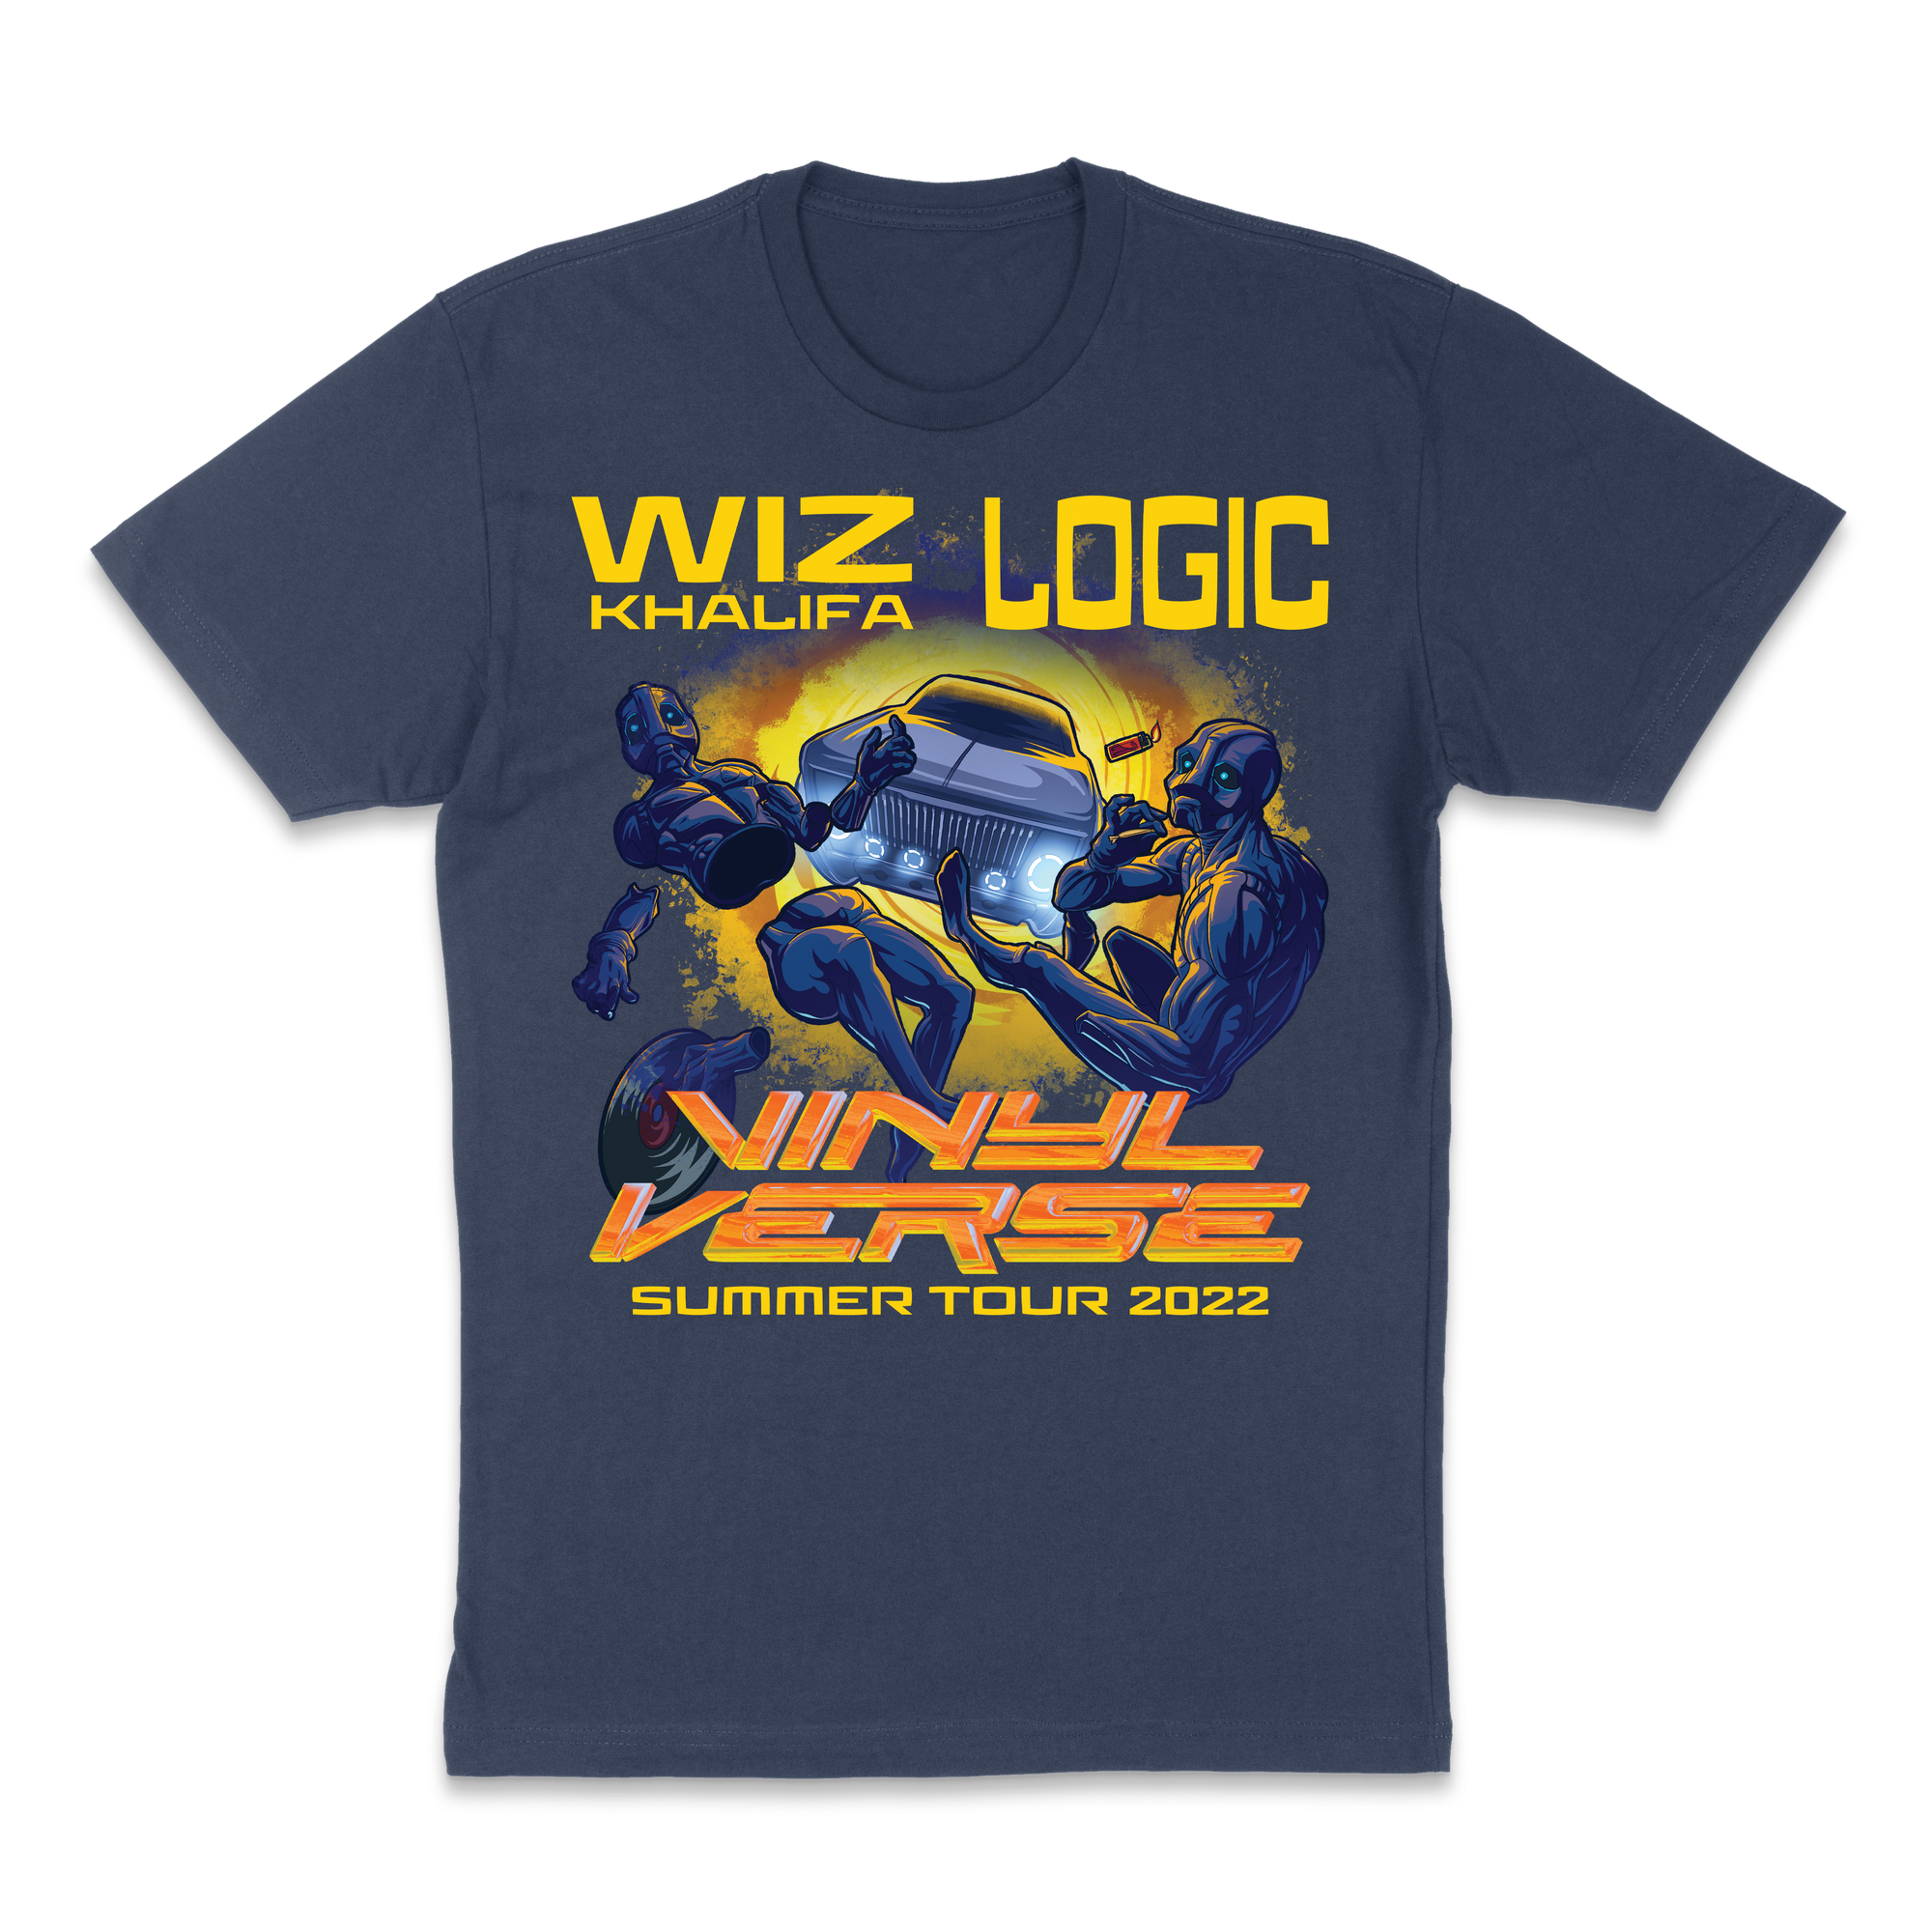 Vinyl Verse Tour Wiz & Logic Collab T-Shirt